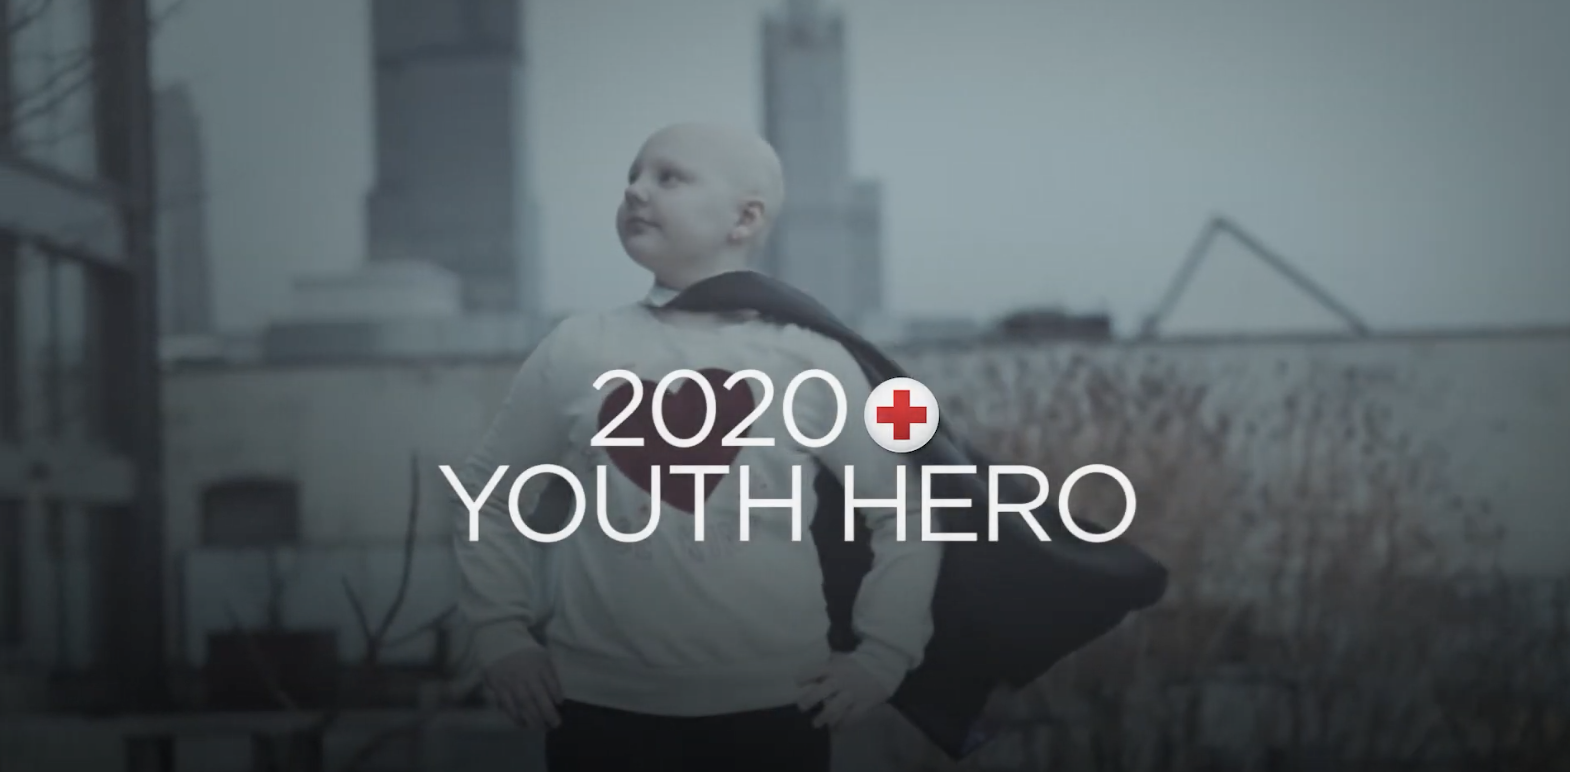 Red Cross Youth Hero, May 2020